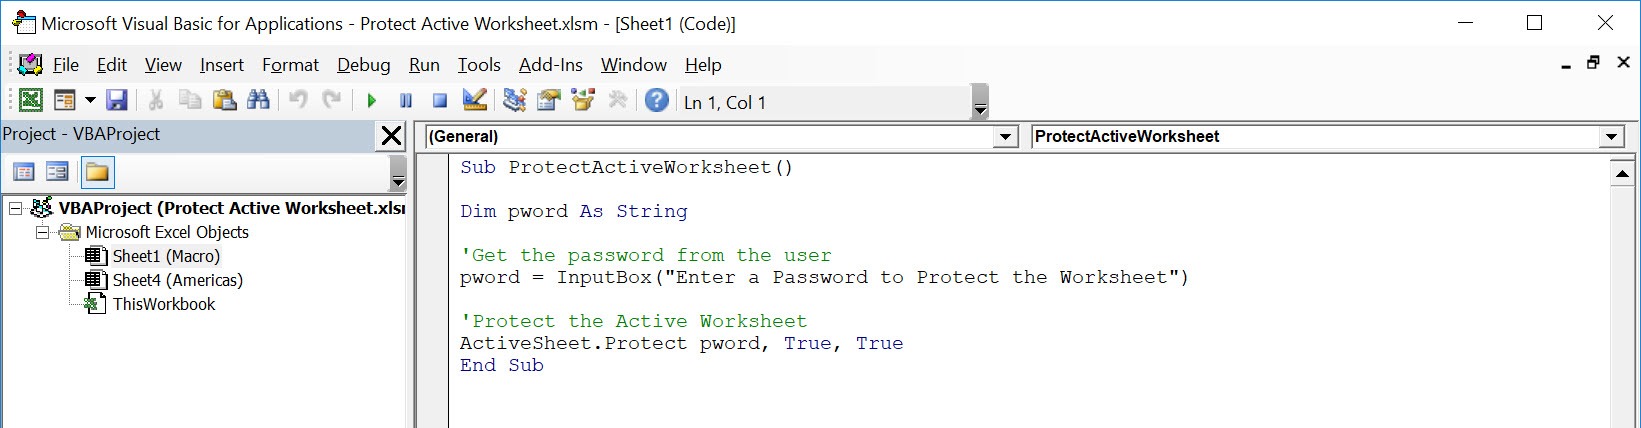 Protect Active Worksheet Using Macros In Excel | MyExcelOnline